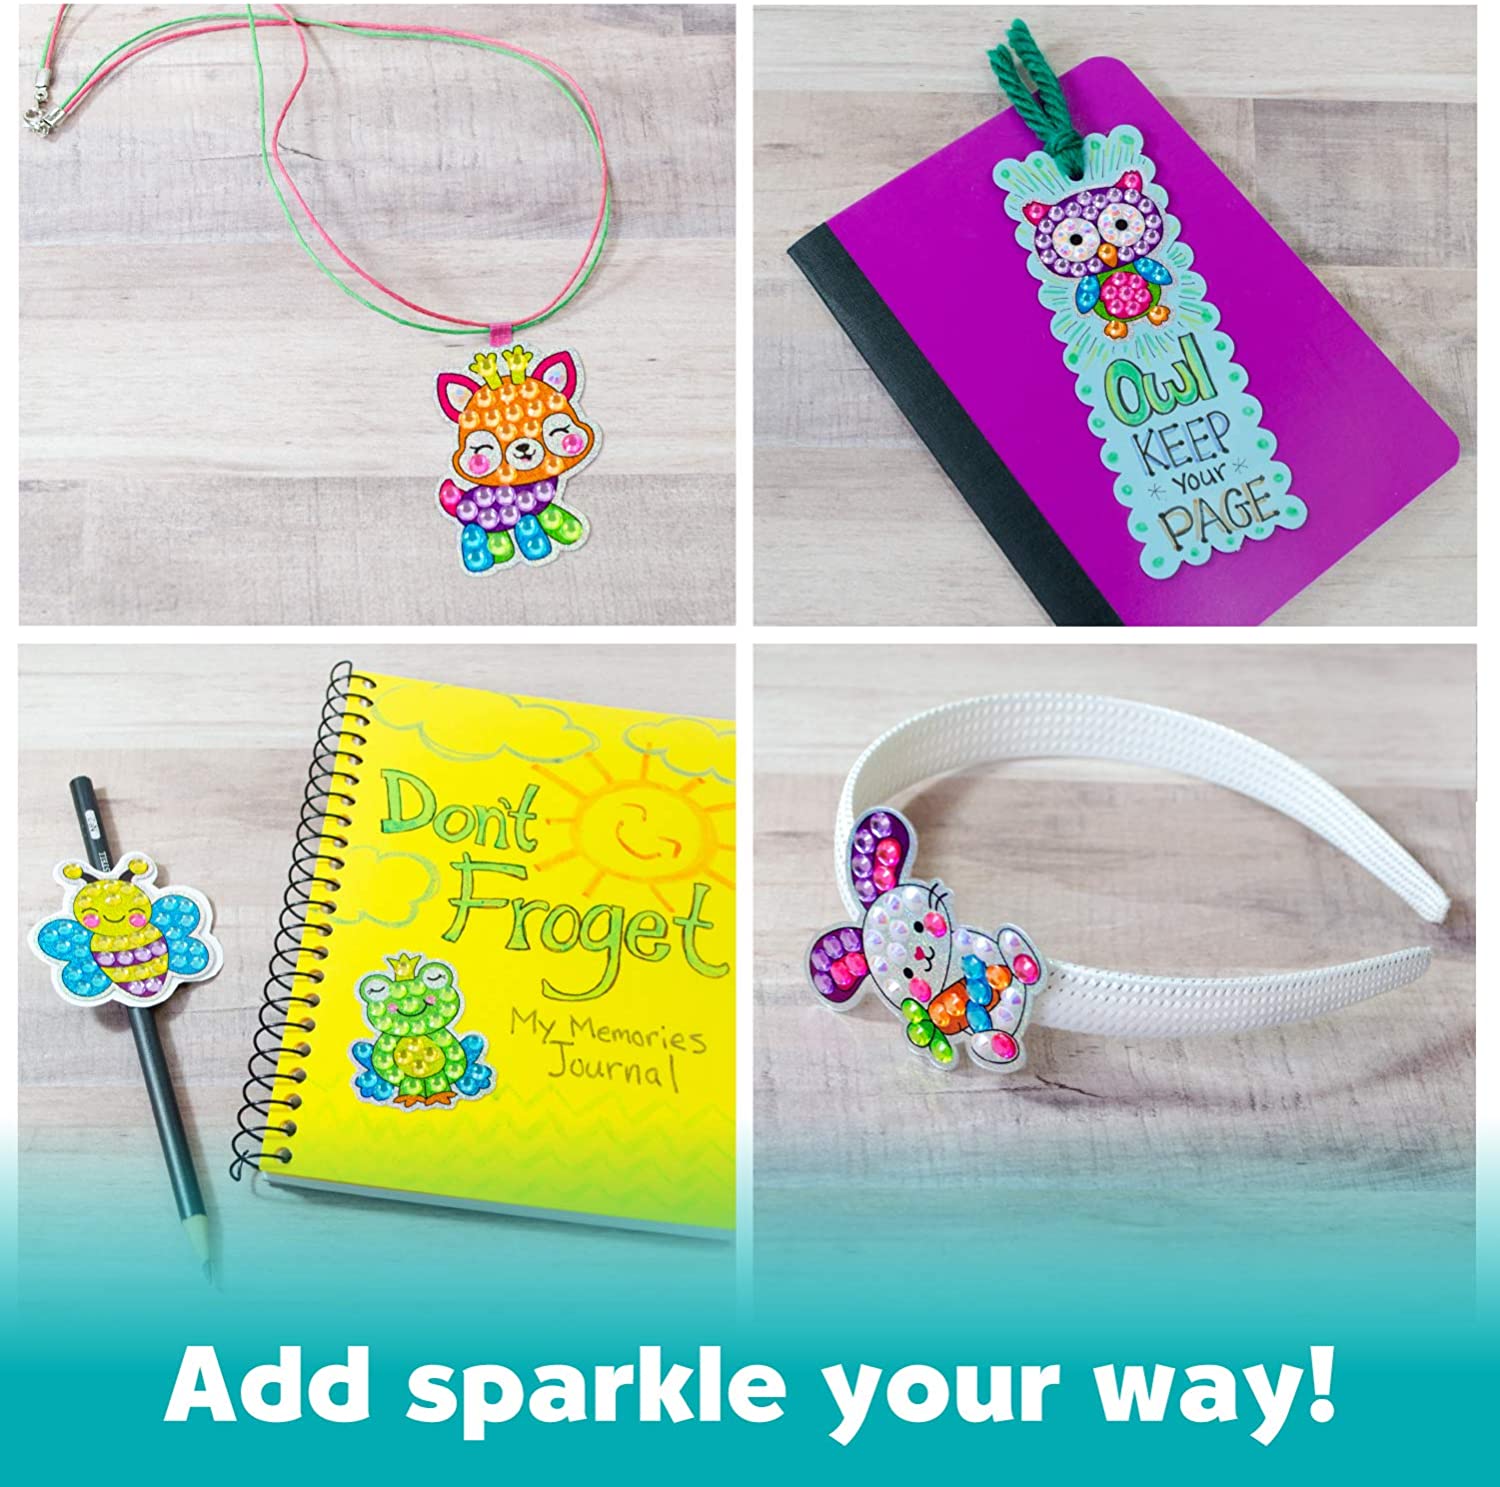 Creativity for Kids Big Gem Diamond Painting Kit - Create Your Own Woo –  Smartazon